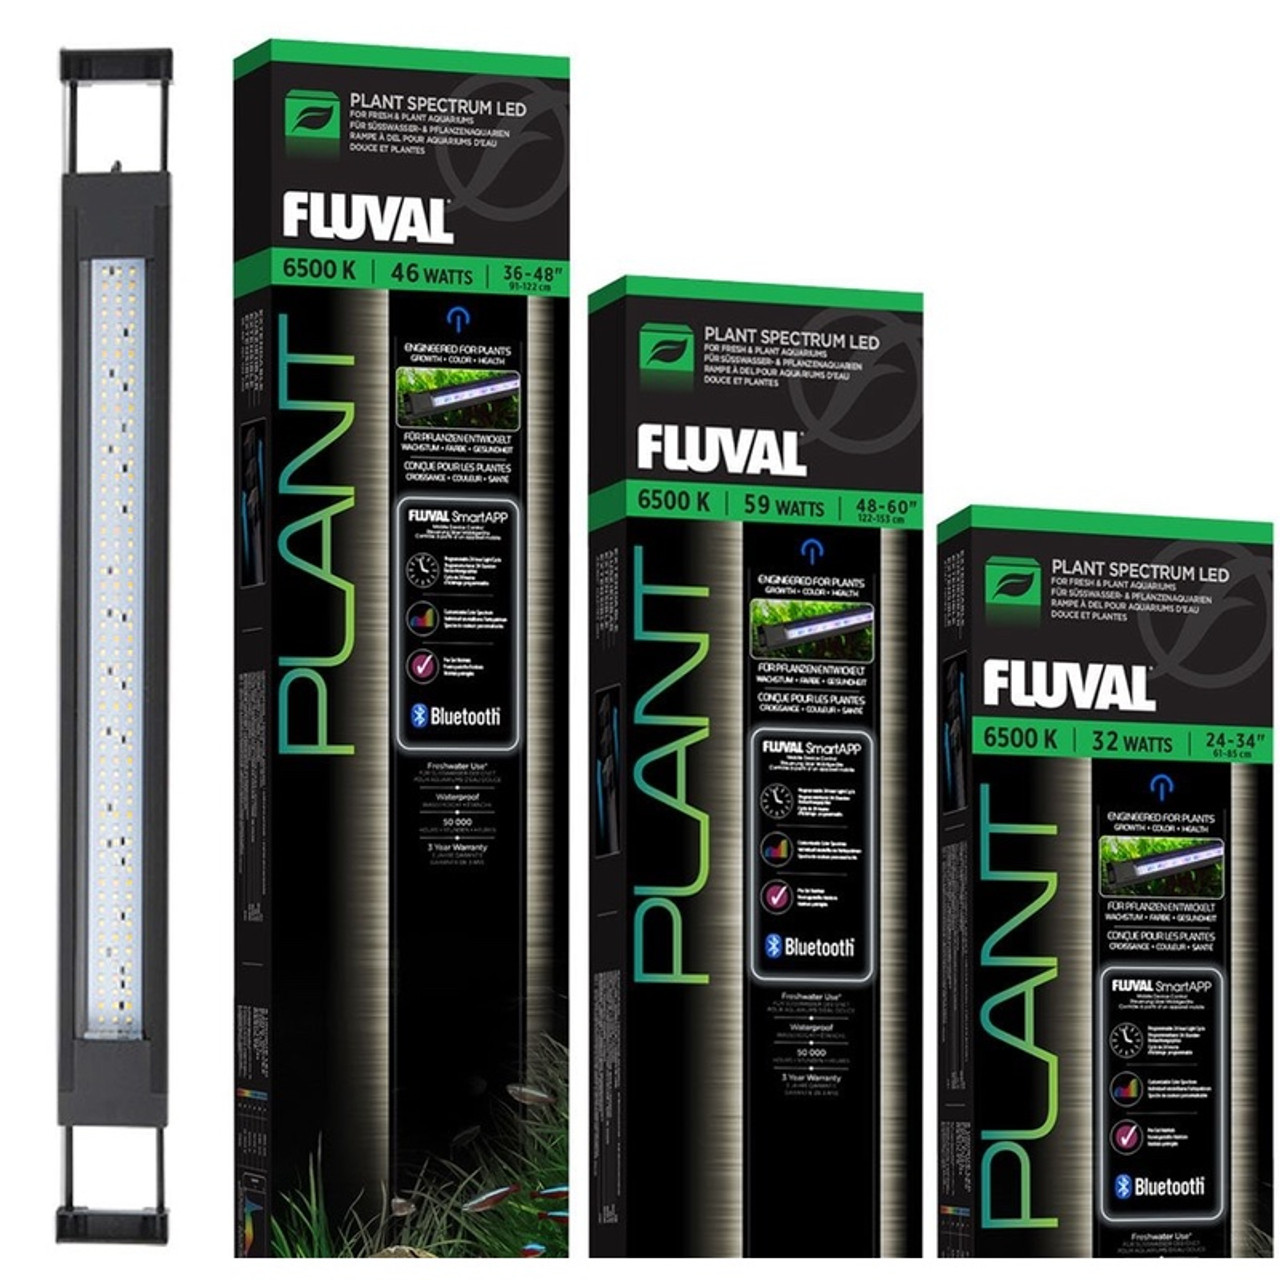 Fluval Plant Spectrum Bluetooth LED 3.0